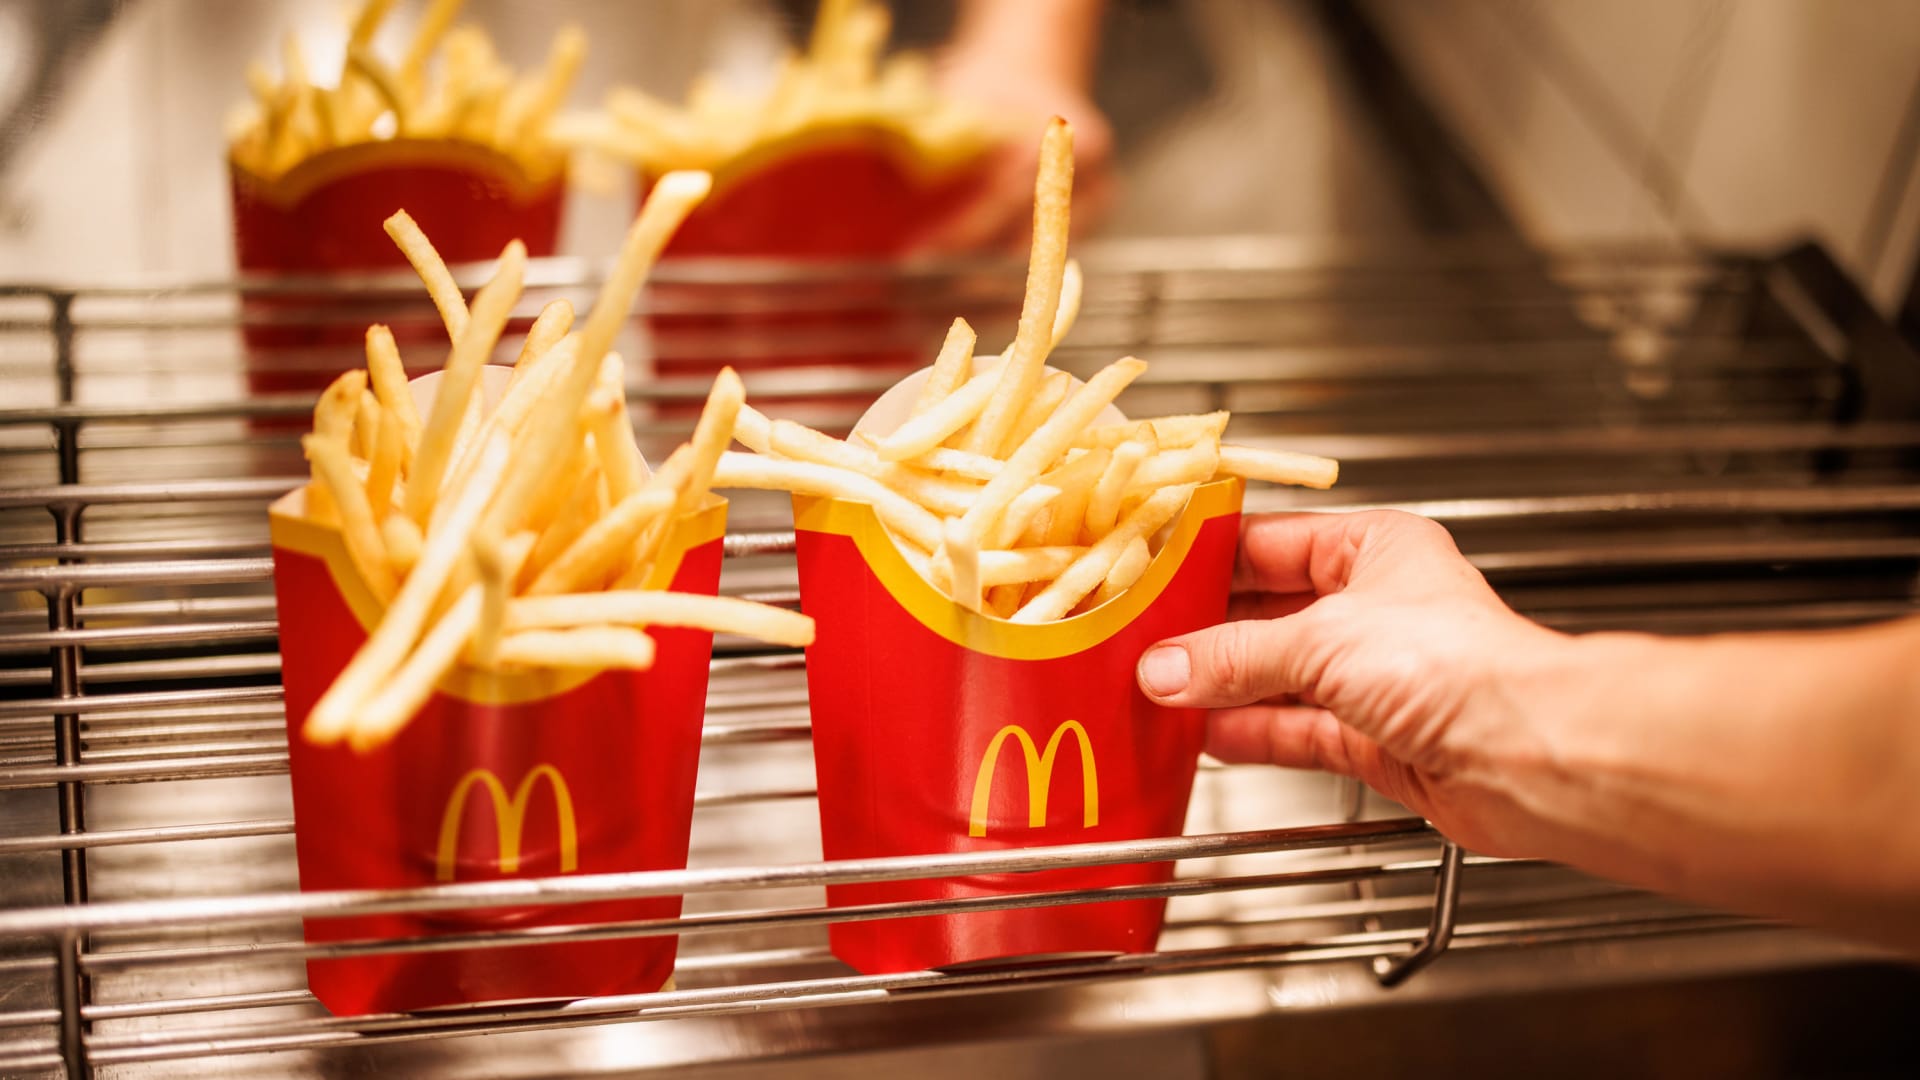 An employee handles fry orders at McDonald's.